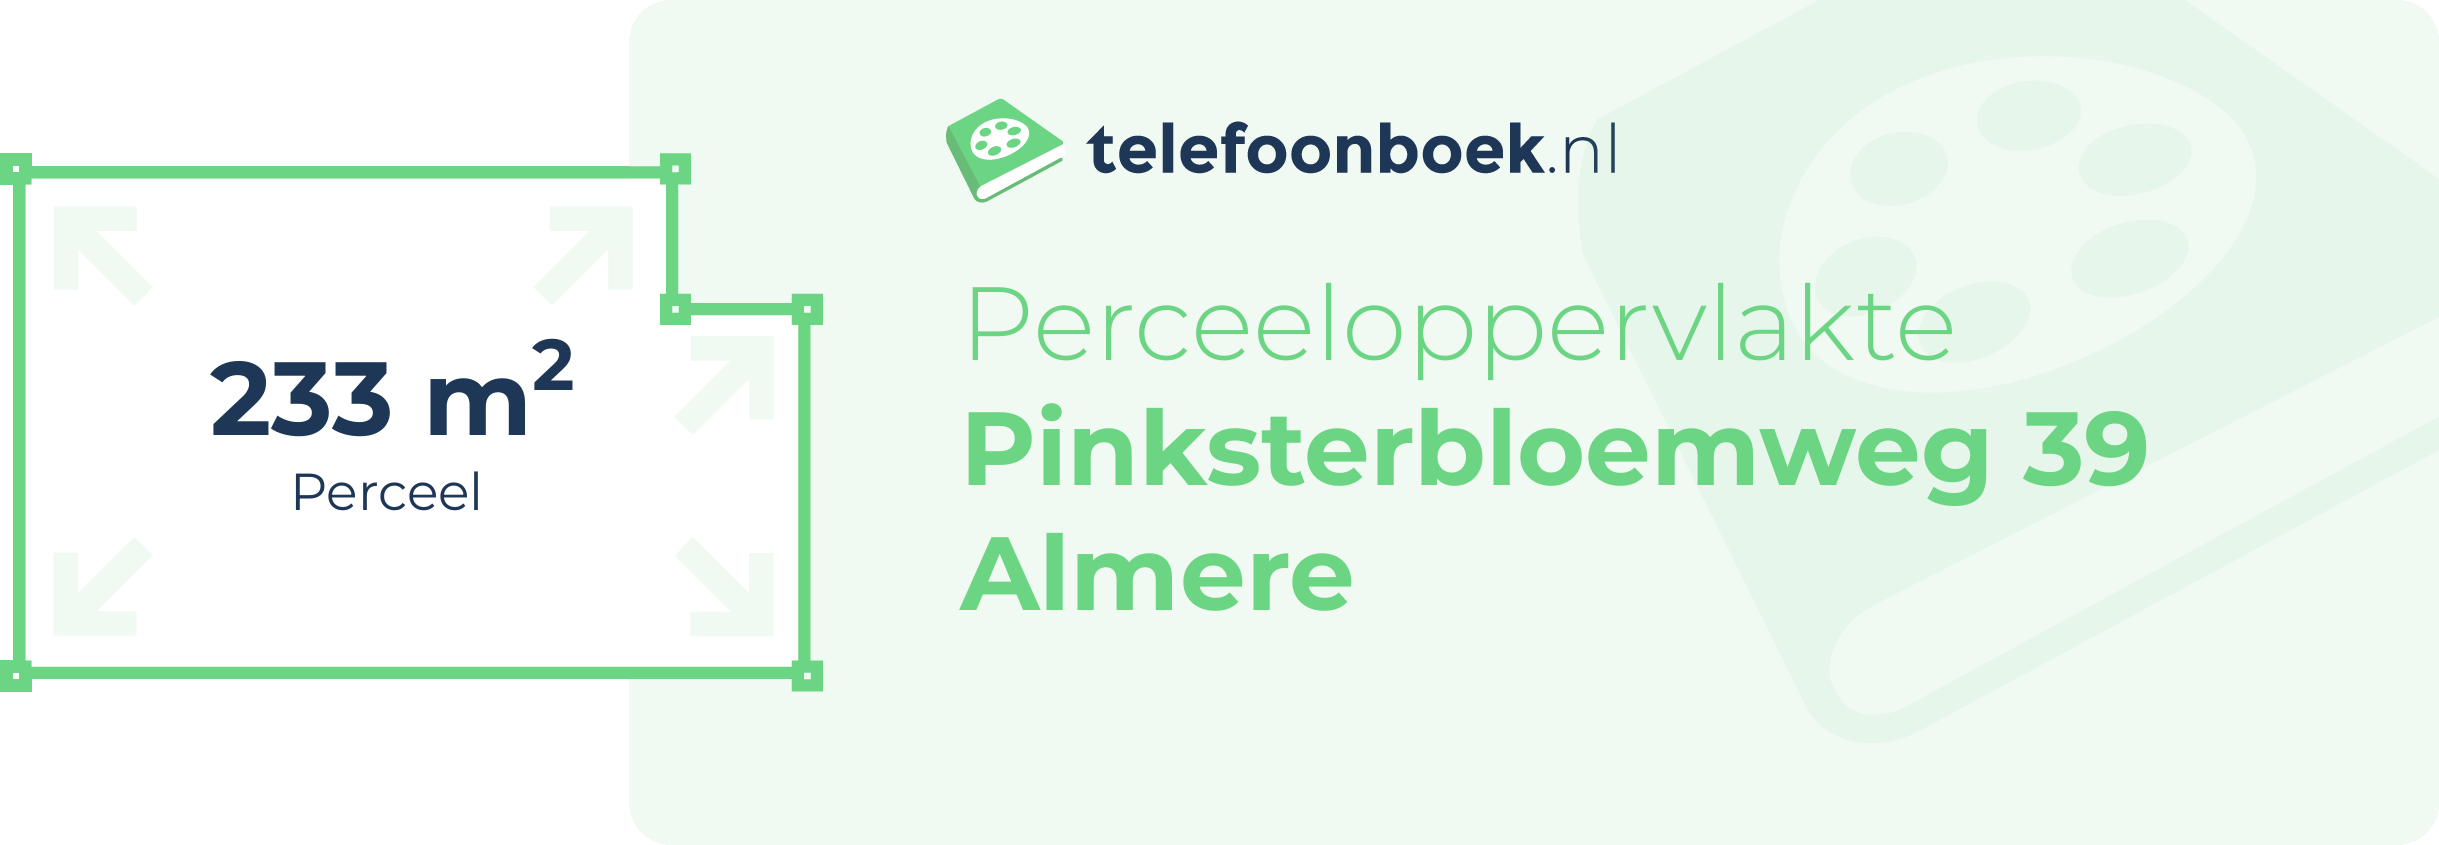 Perceeloppervlakte Pinksterbloemweg 39 Almere